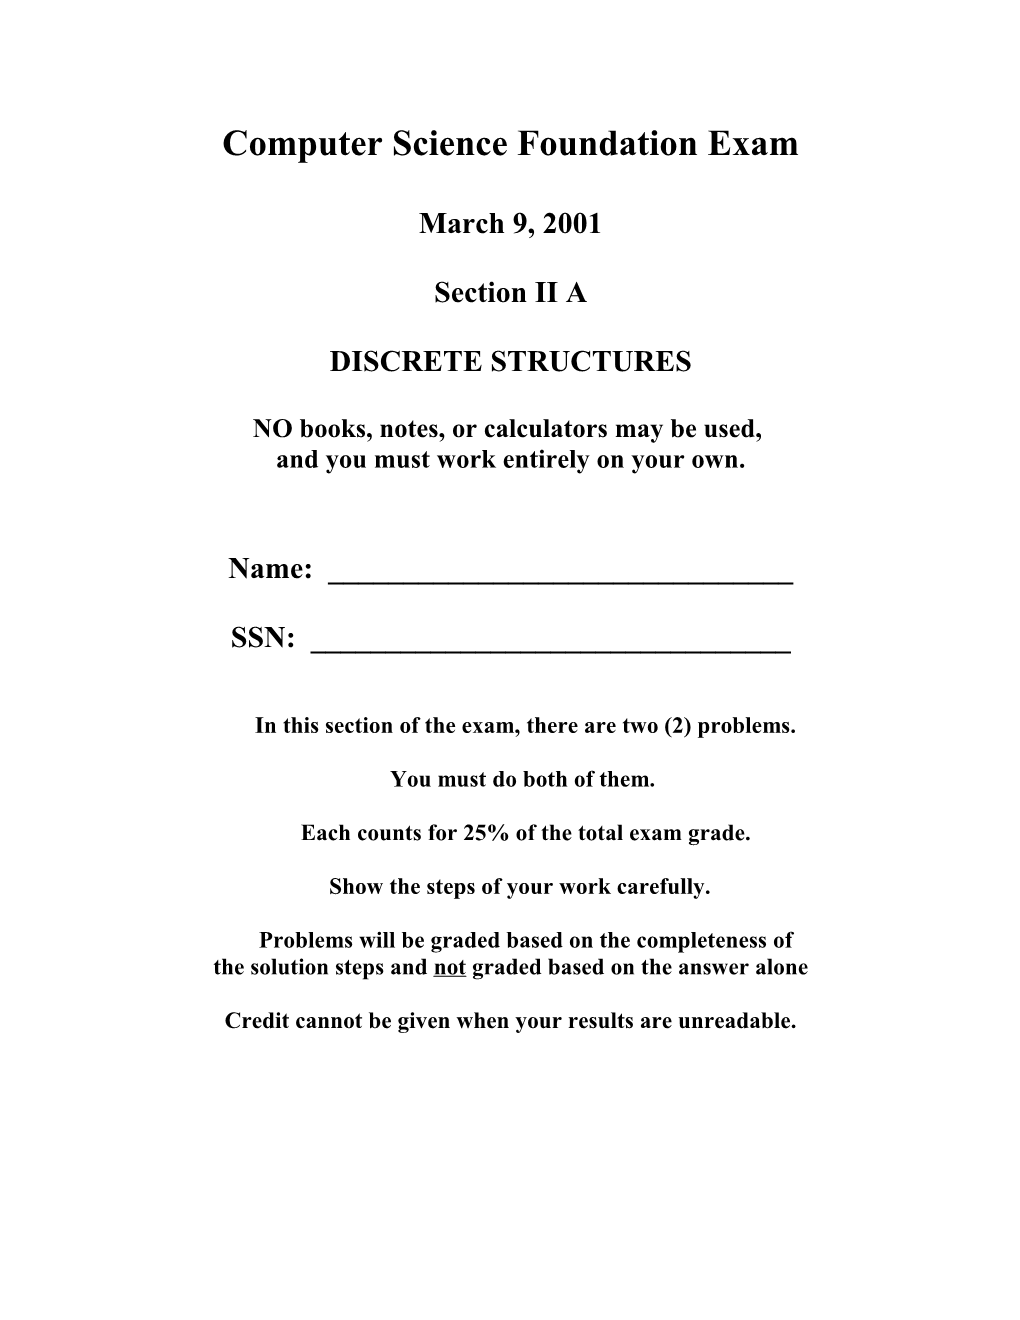 Foundation Exam (Discrete Structures)